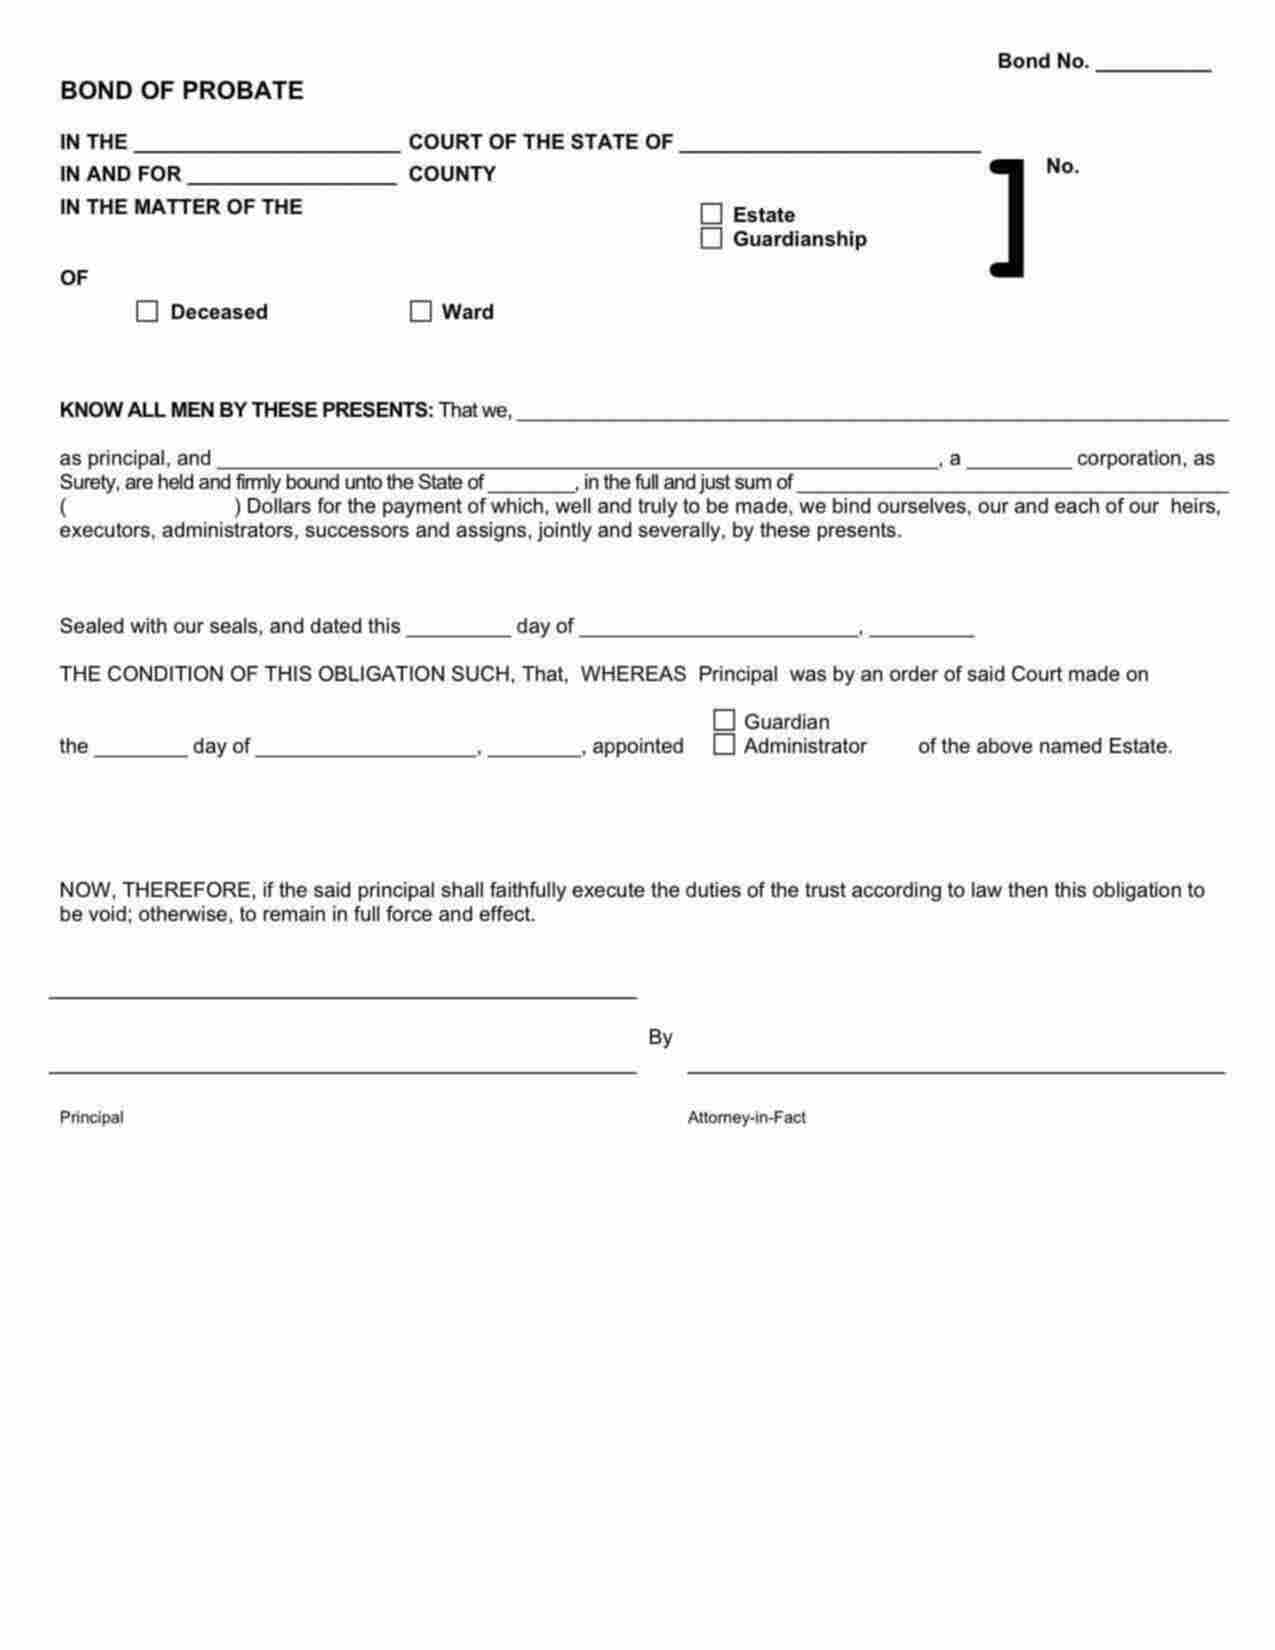 Tennessee Administrator/Executor Bond Form